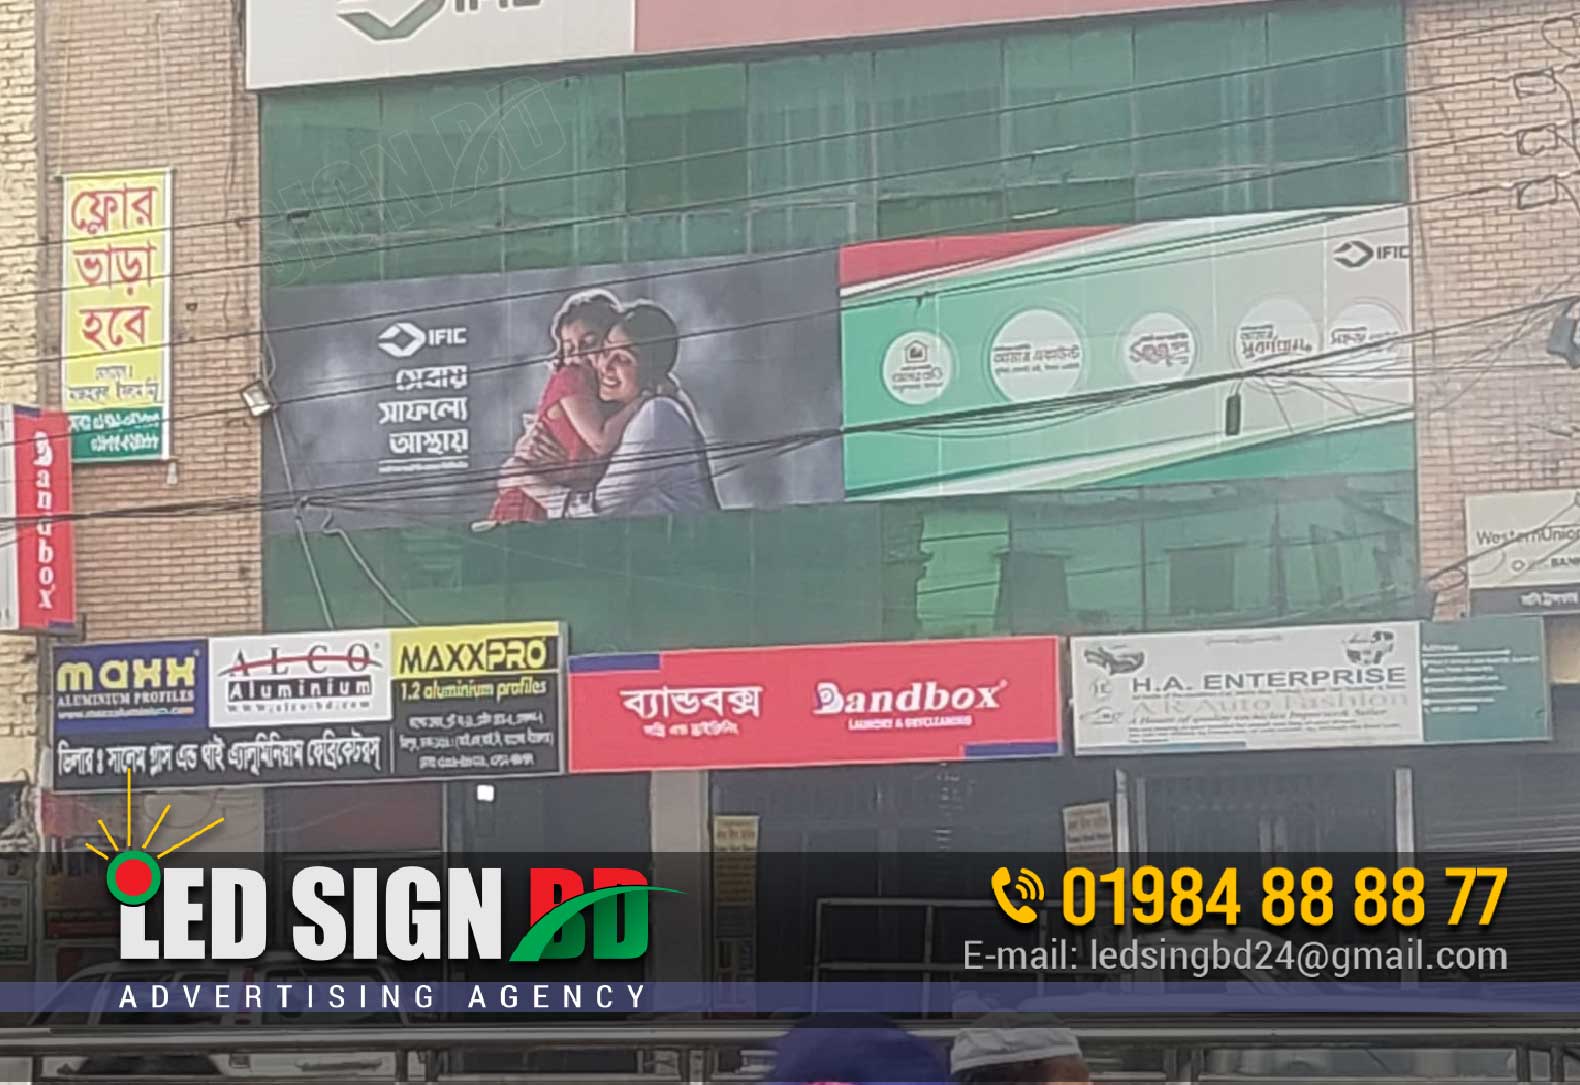 Apex Pana Signboard in Bangladesh, Signboard Making Company in Dhaka Bangladesh, Neon Signage in Dhaka Bangladesh,